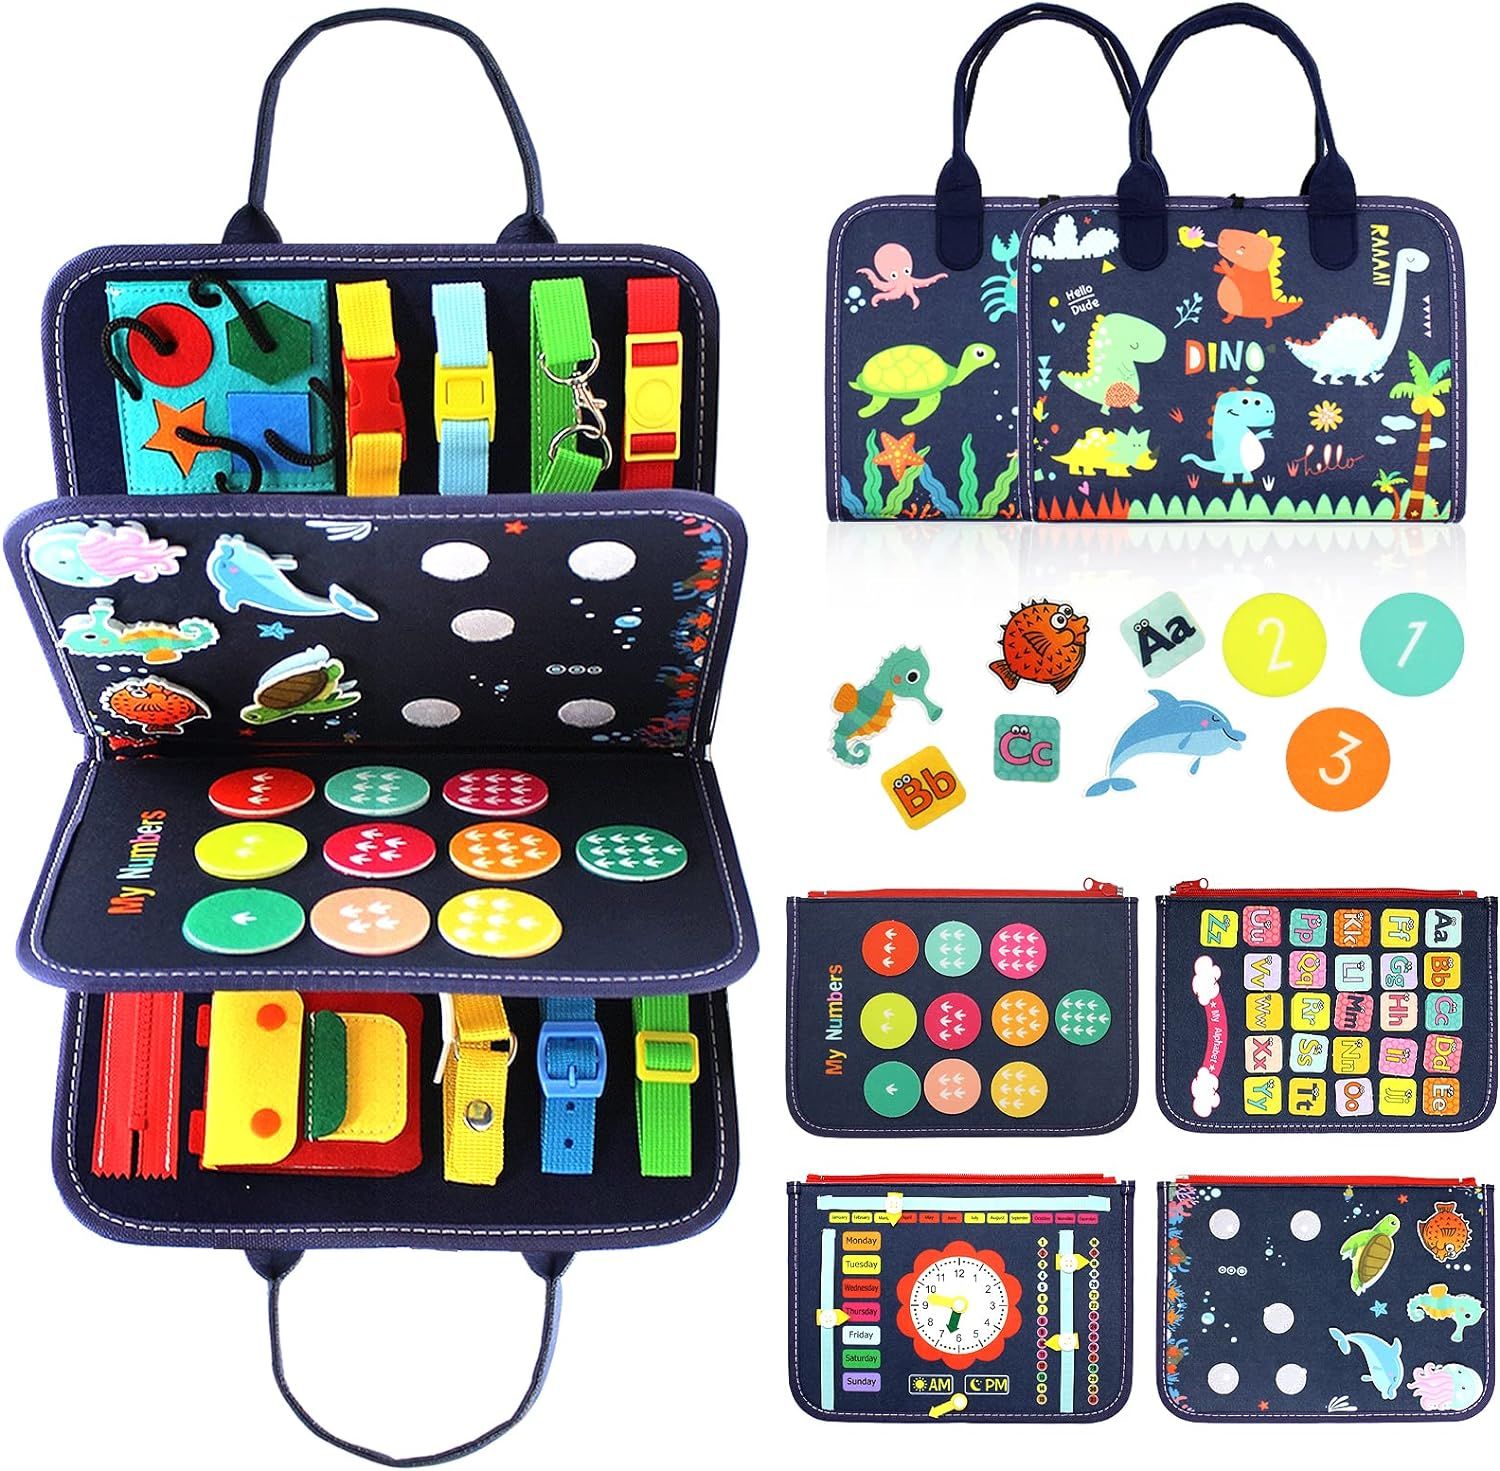 Qizfun Busy Board Montessori Toy for 1 2 3 4 Years Old, Educational Activity Sensory Board Presch... | Amazon (US)